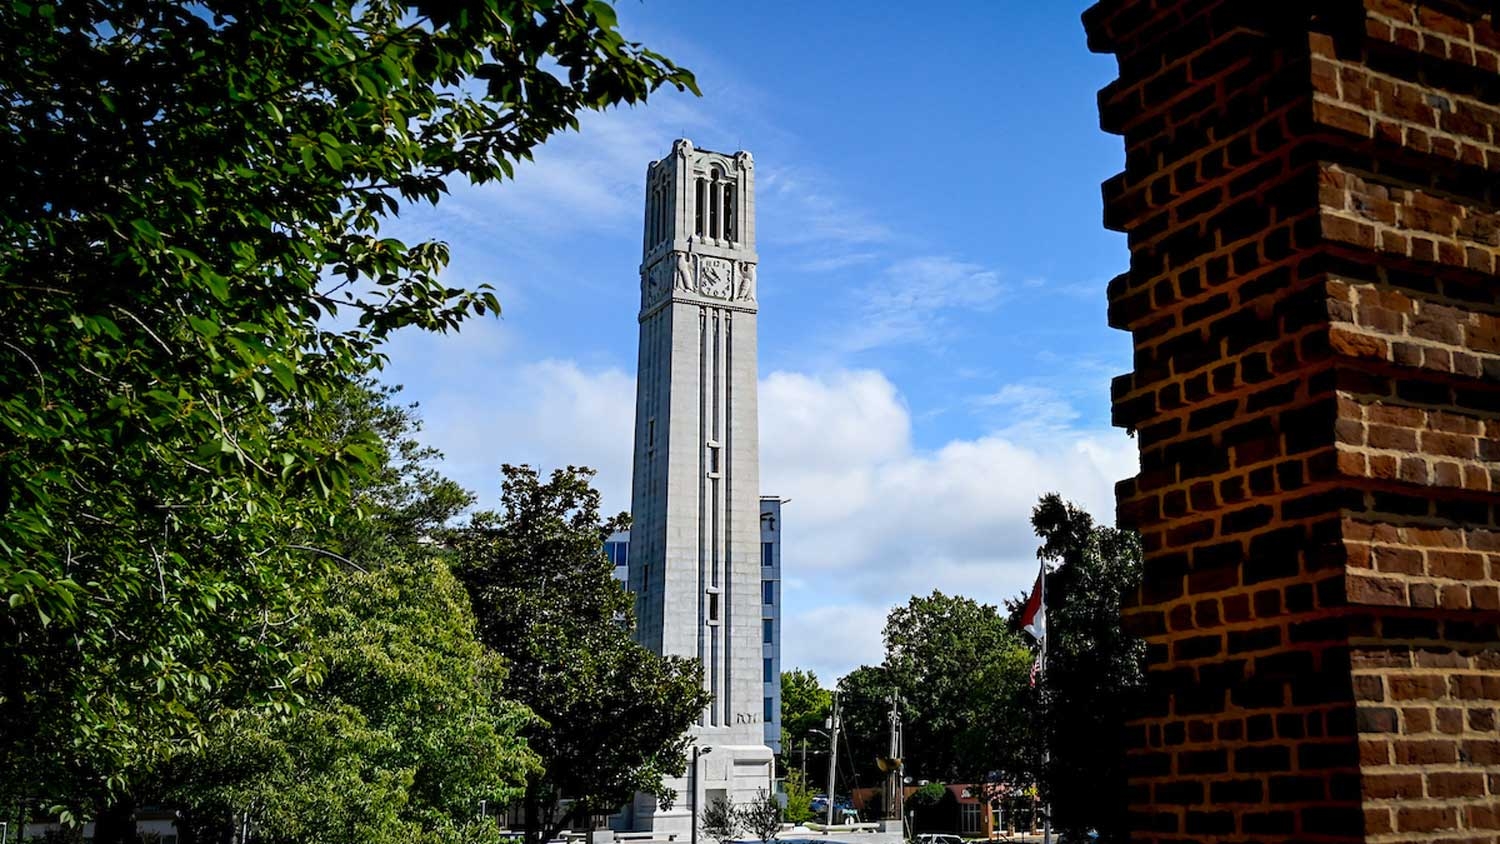 NC State Memorial Belltower in the fall